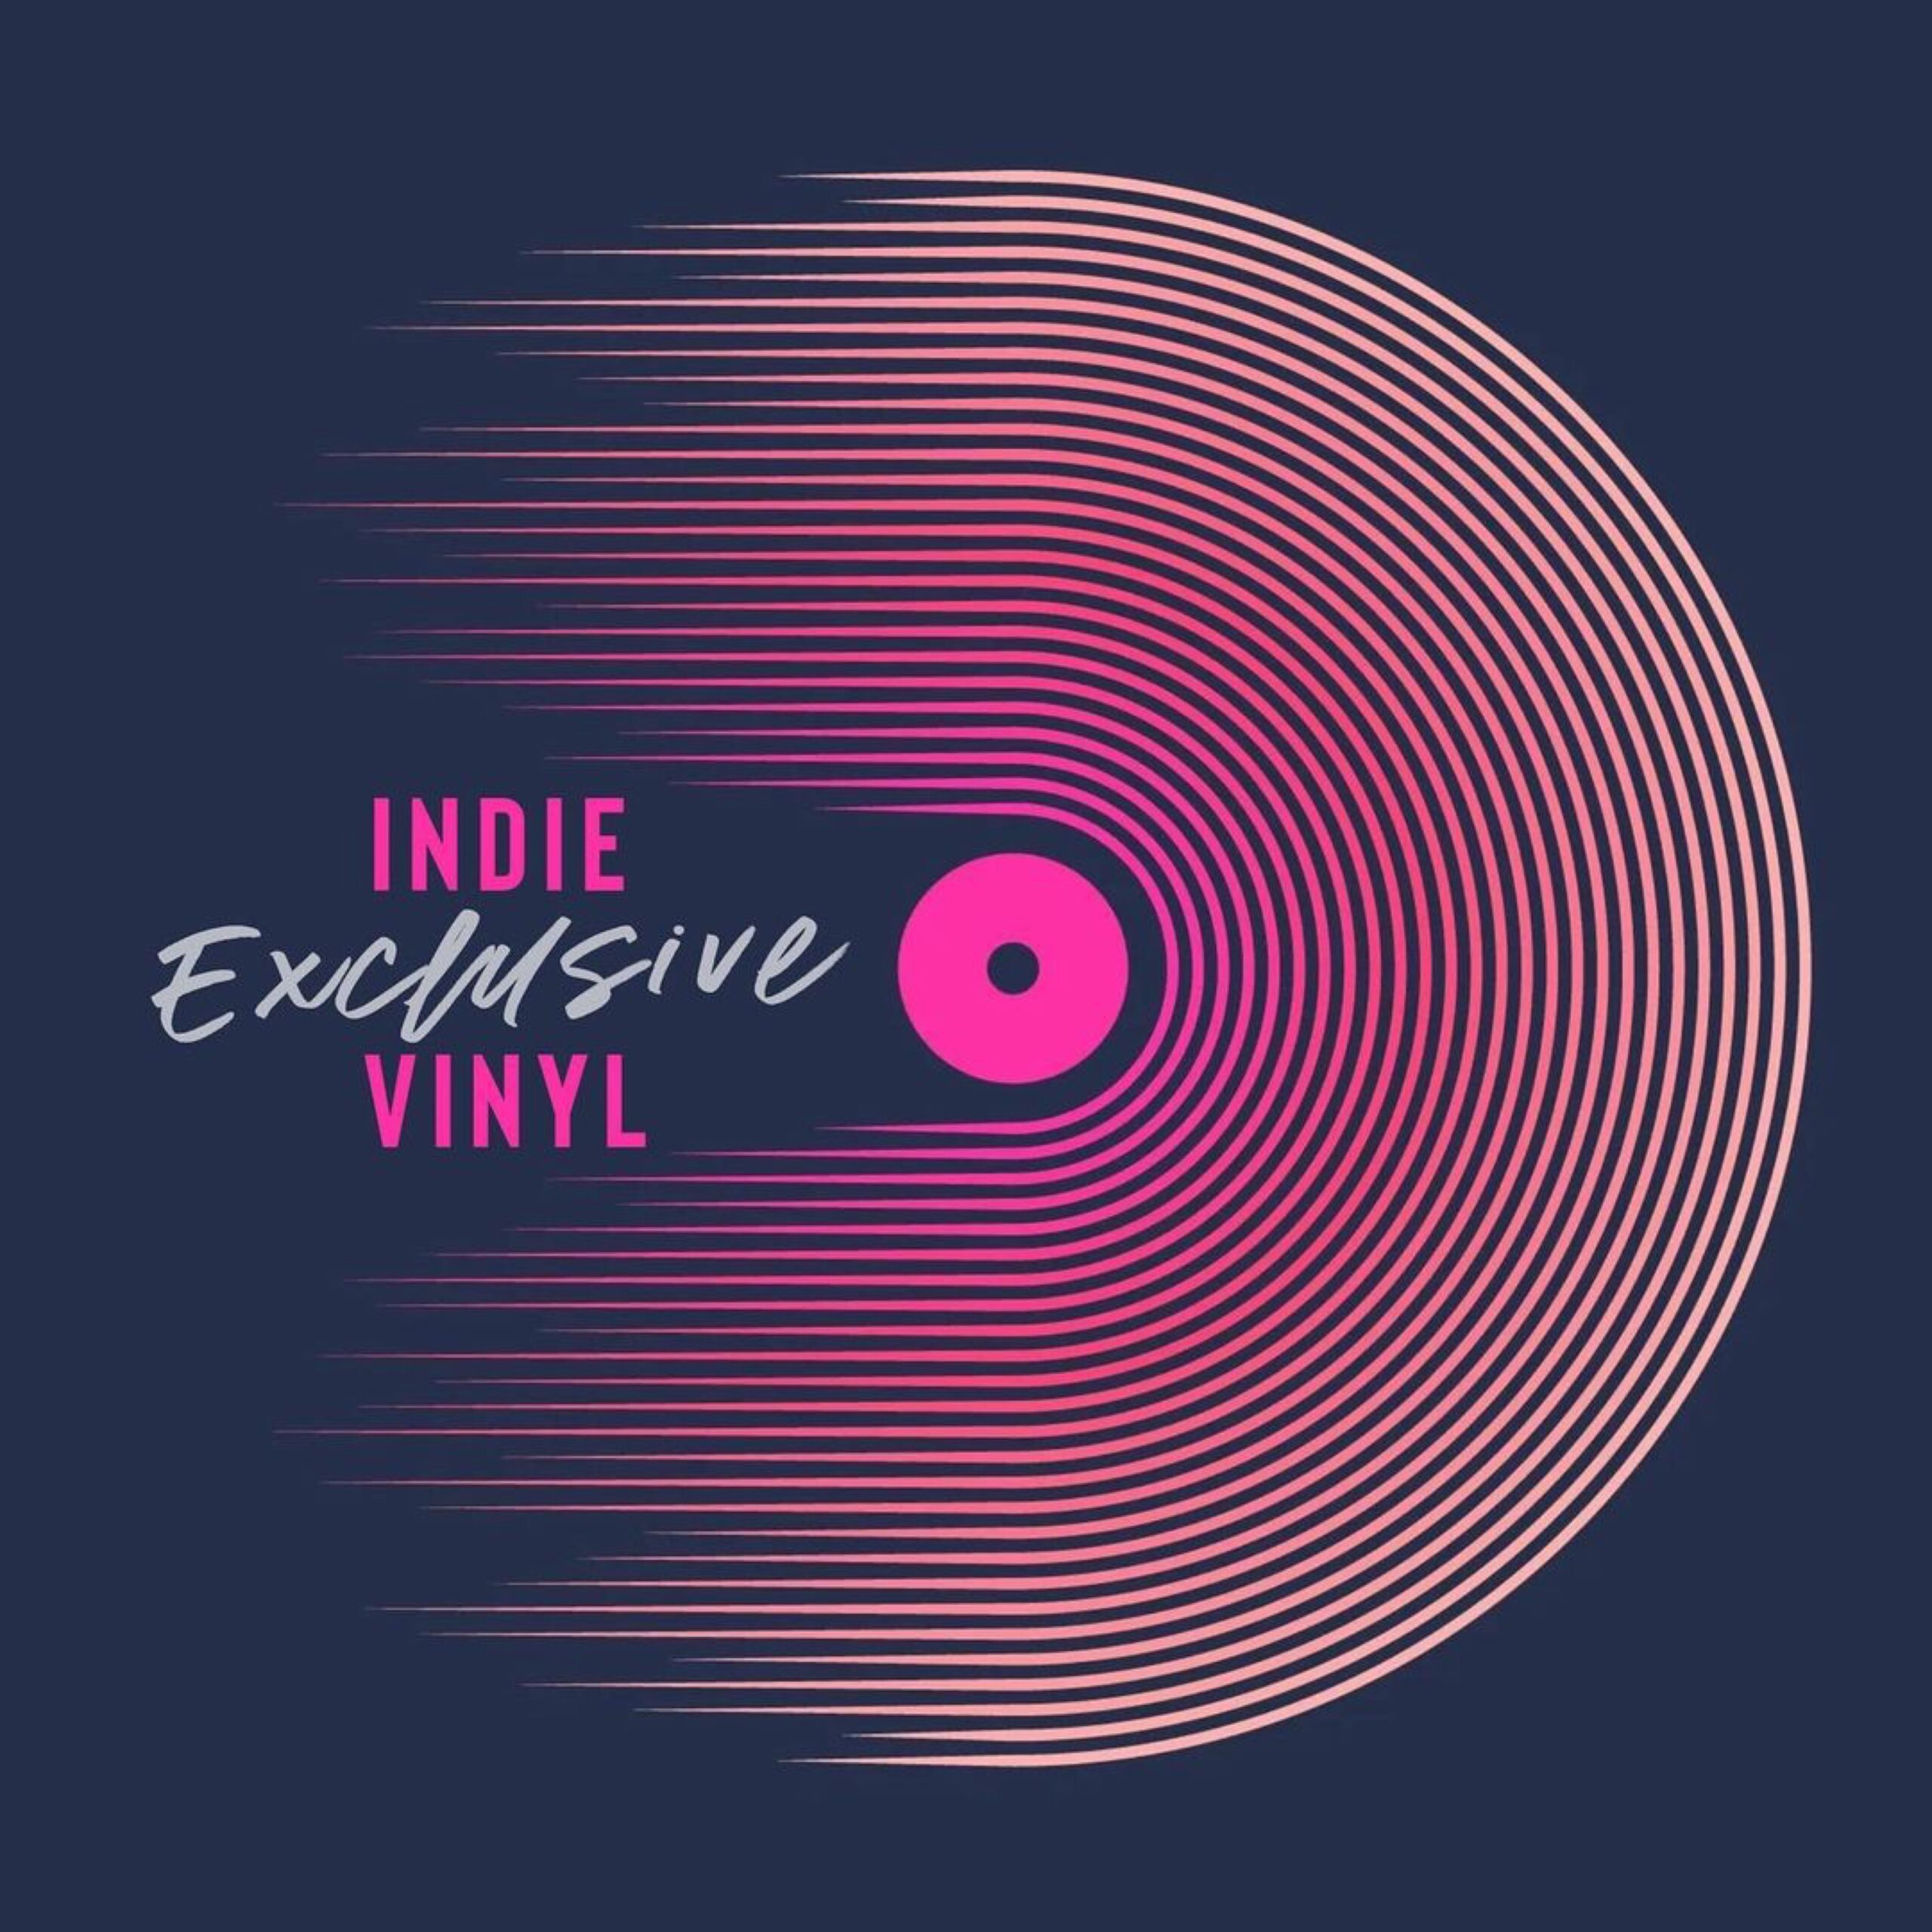 Indie exclusive vinyl